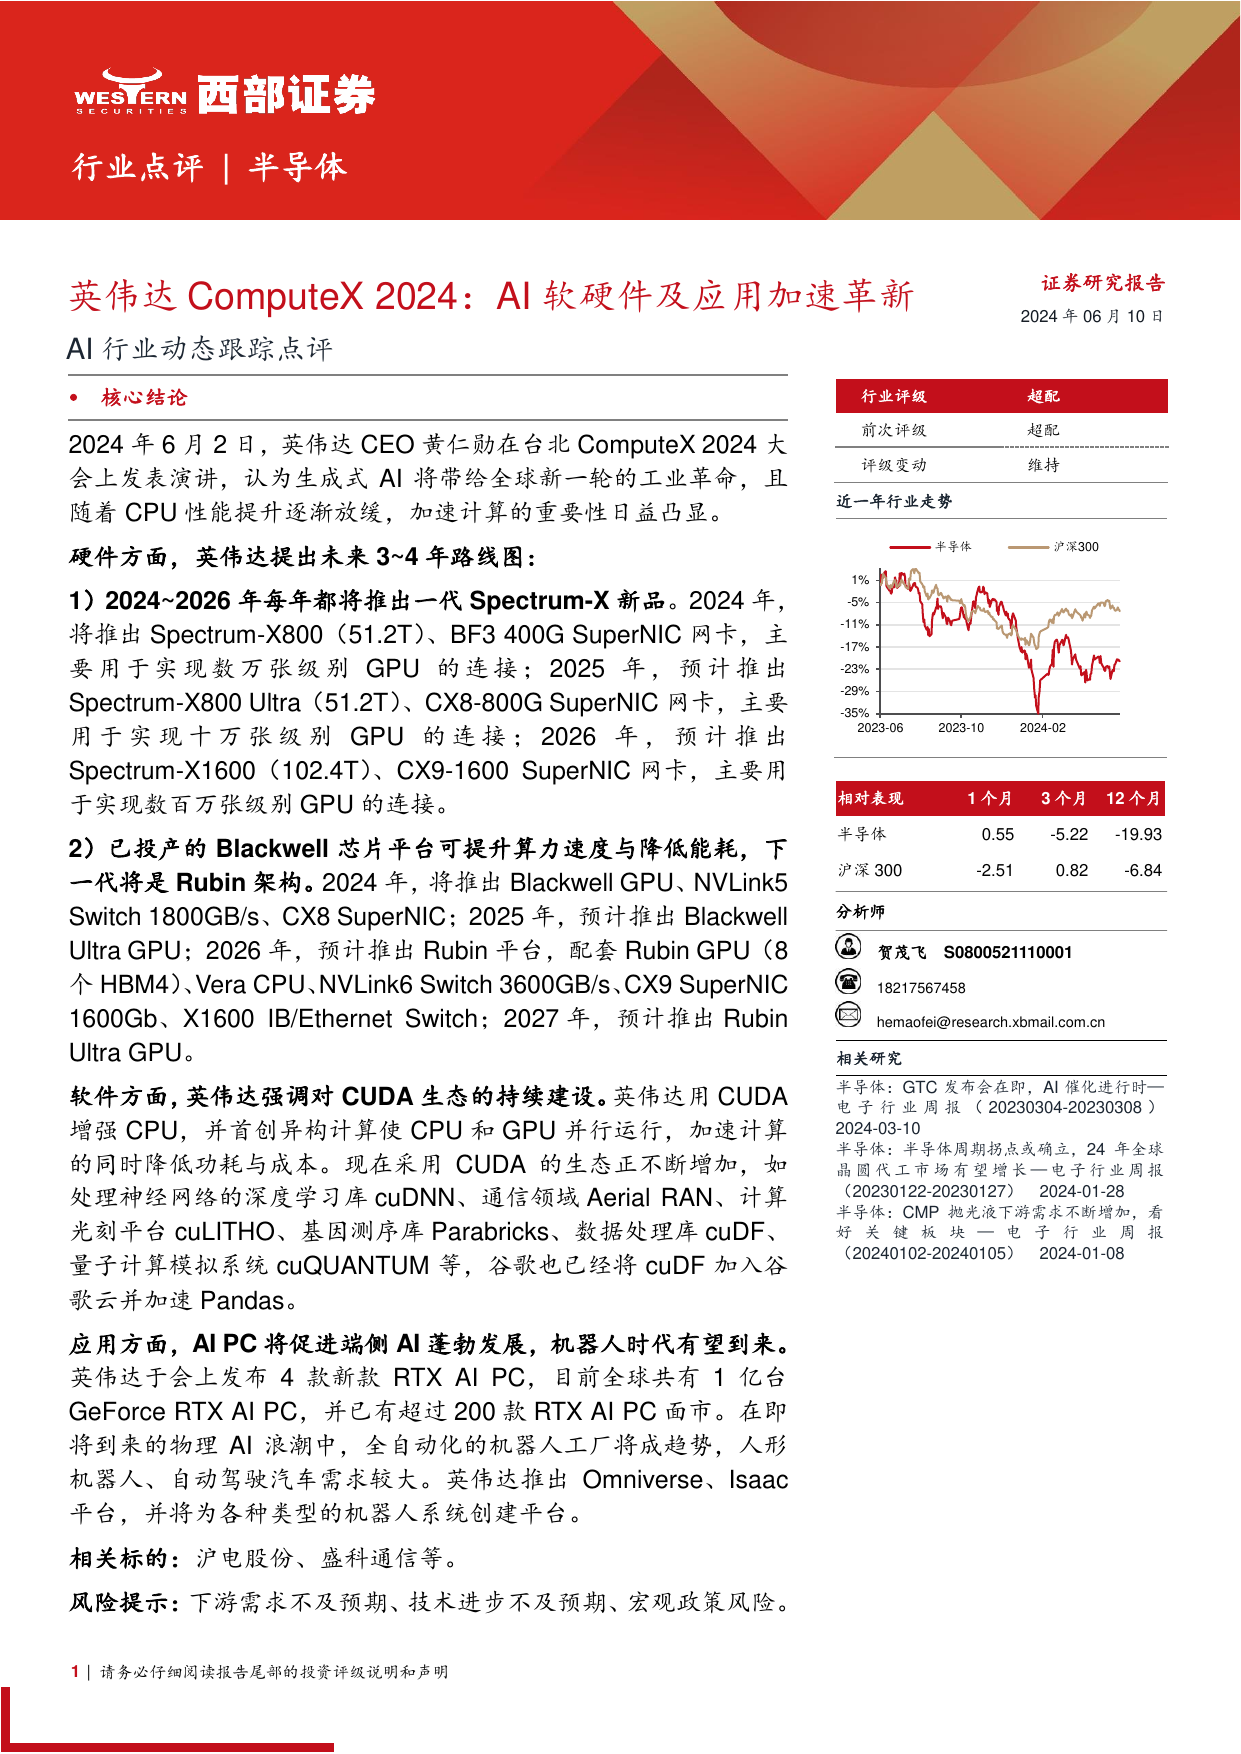 AI行业动态跟踪点评-英伟达ComputeX 2024：AI软硬件及应用加速革新.pdf